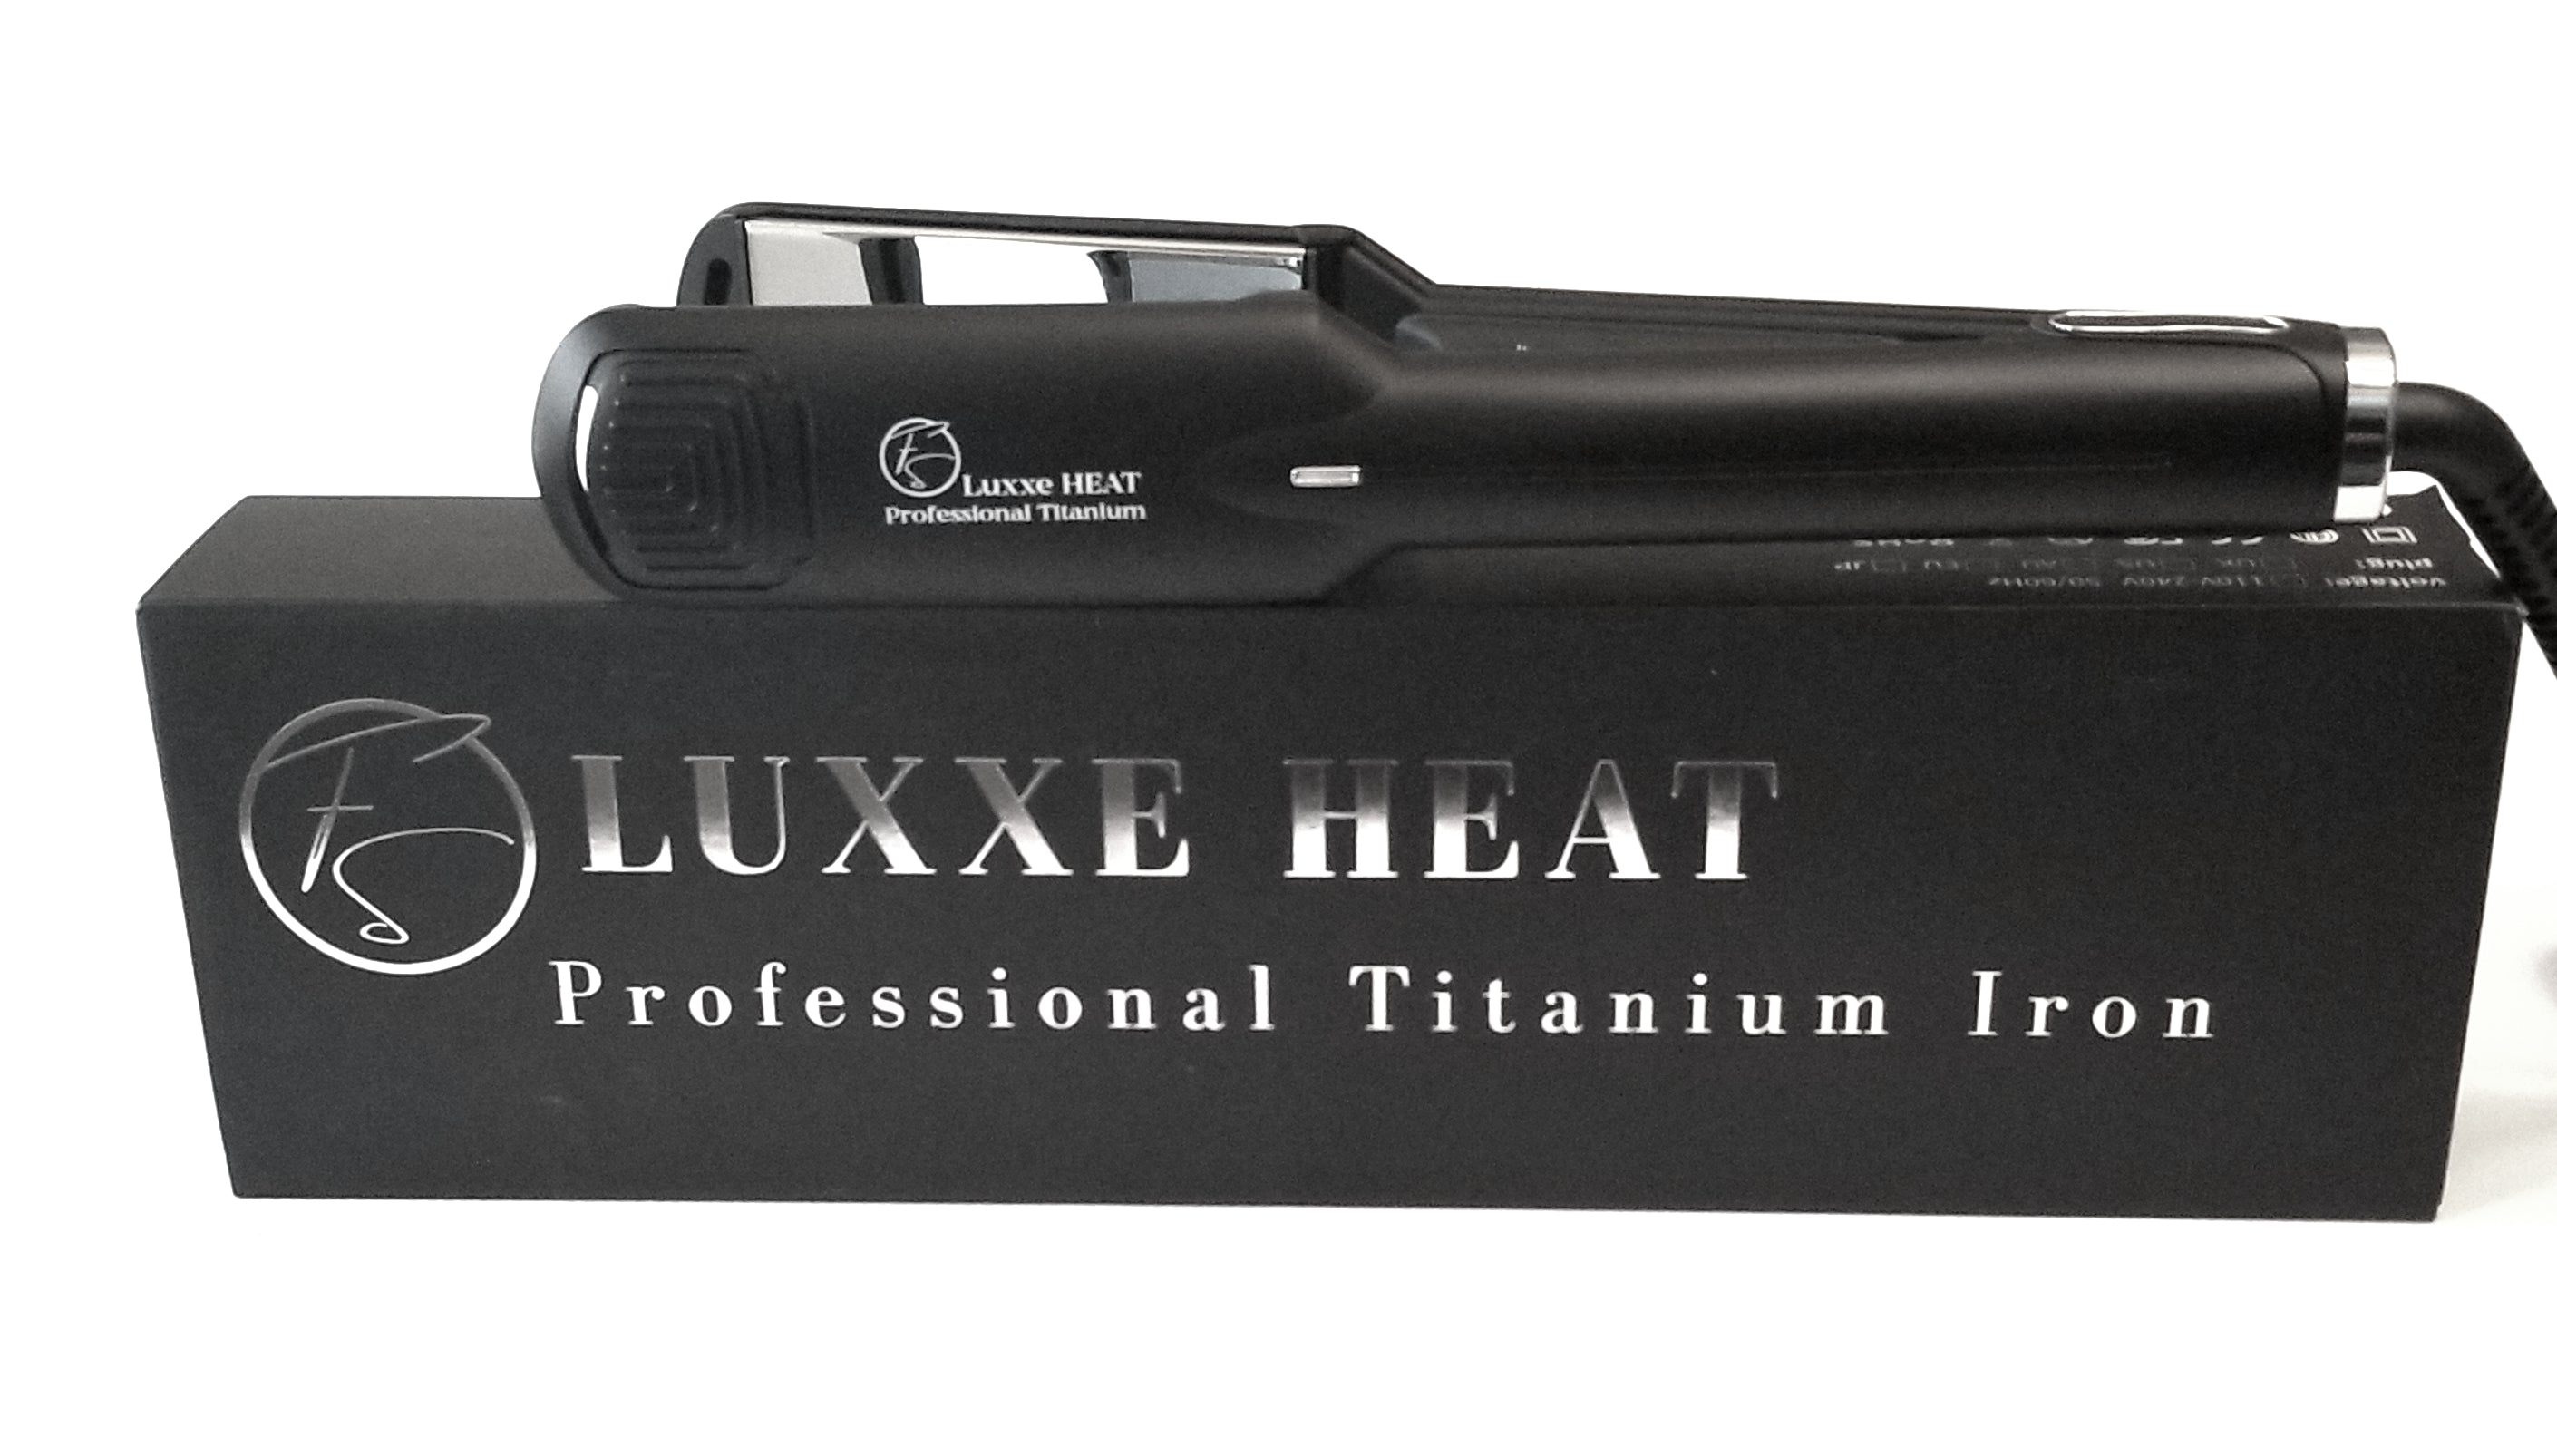 FS Luxxe Heat Professional Titanium Irons